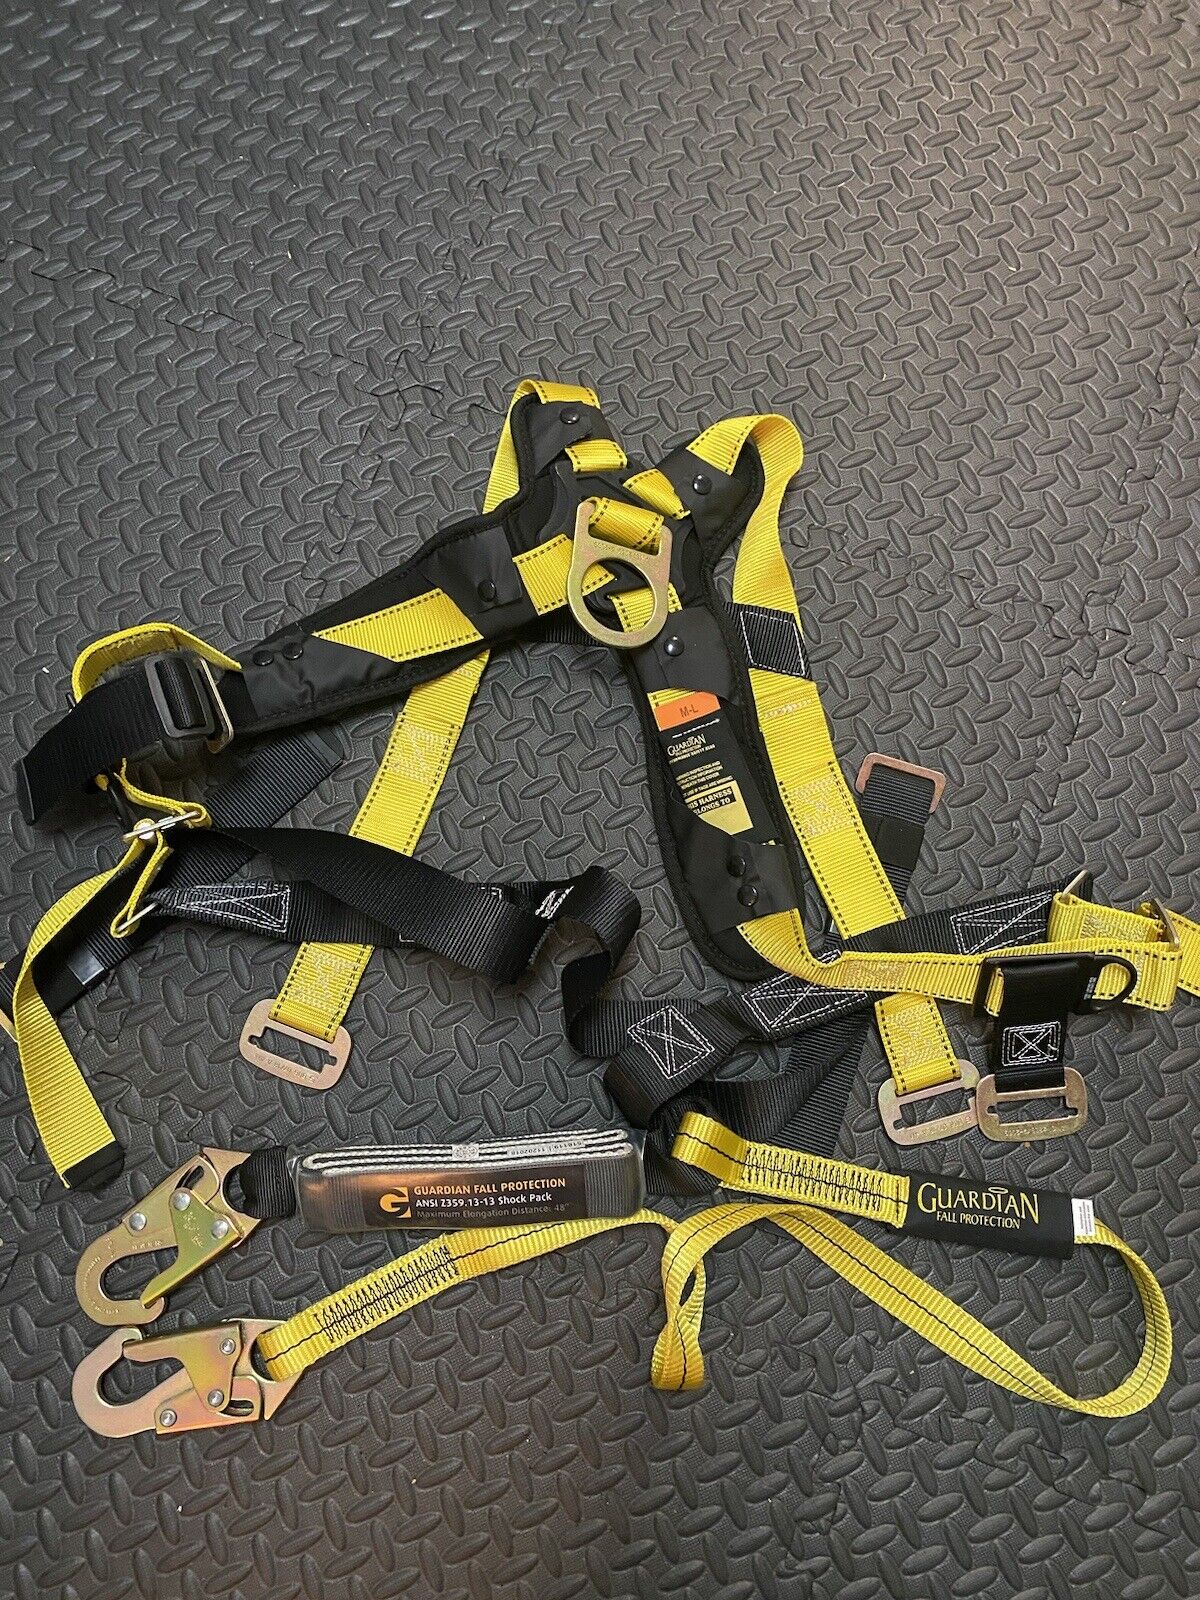 Guardian Fall Protection 11160 M-L Seraph Universal Harness w/ Lanyard 01220 NEW